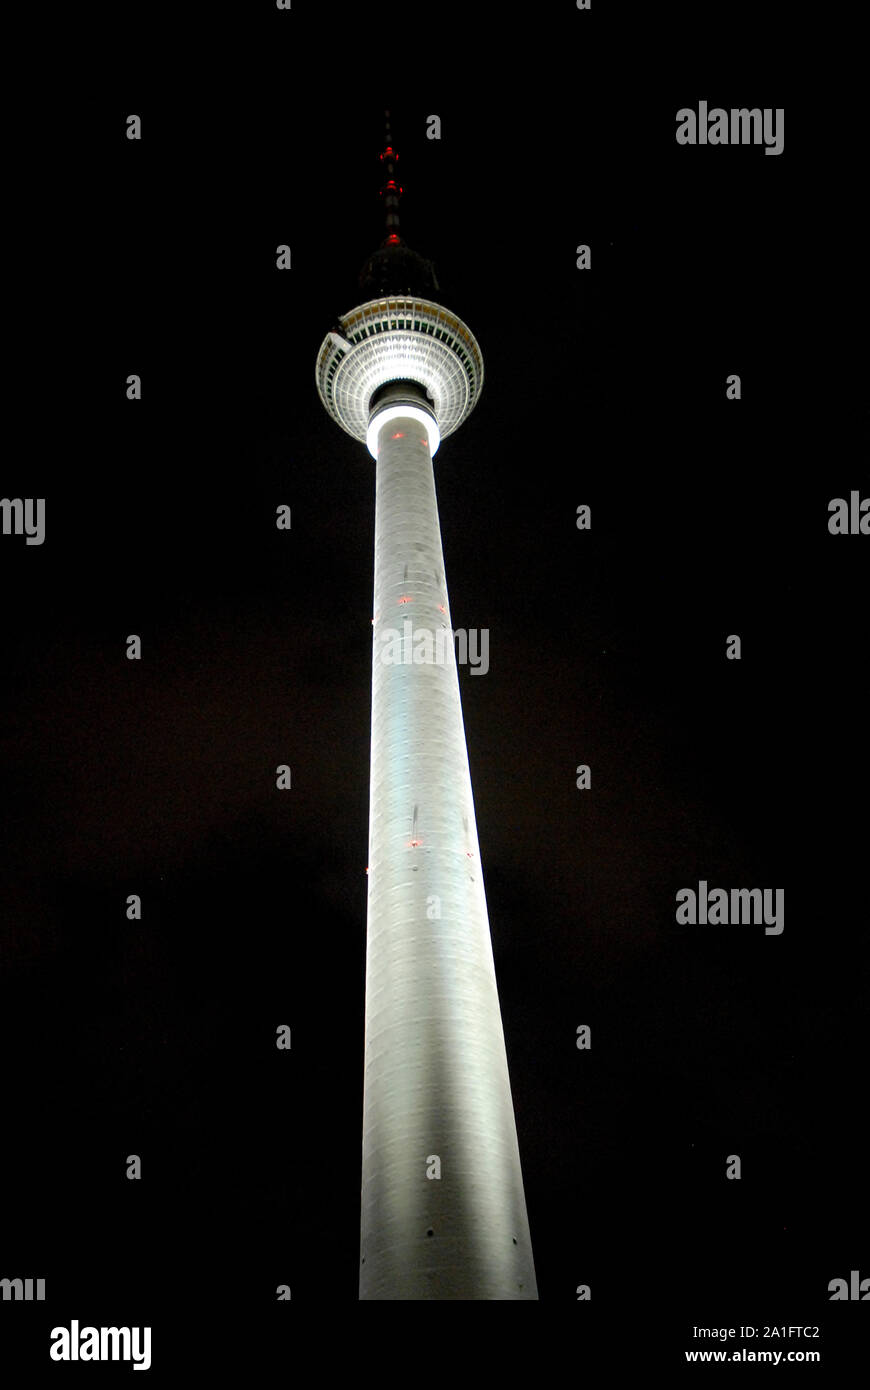 TV Tower, Berlin, Germany Stock Photo - Alamy